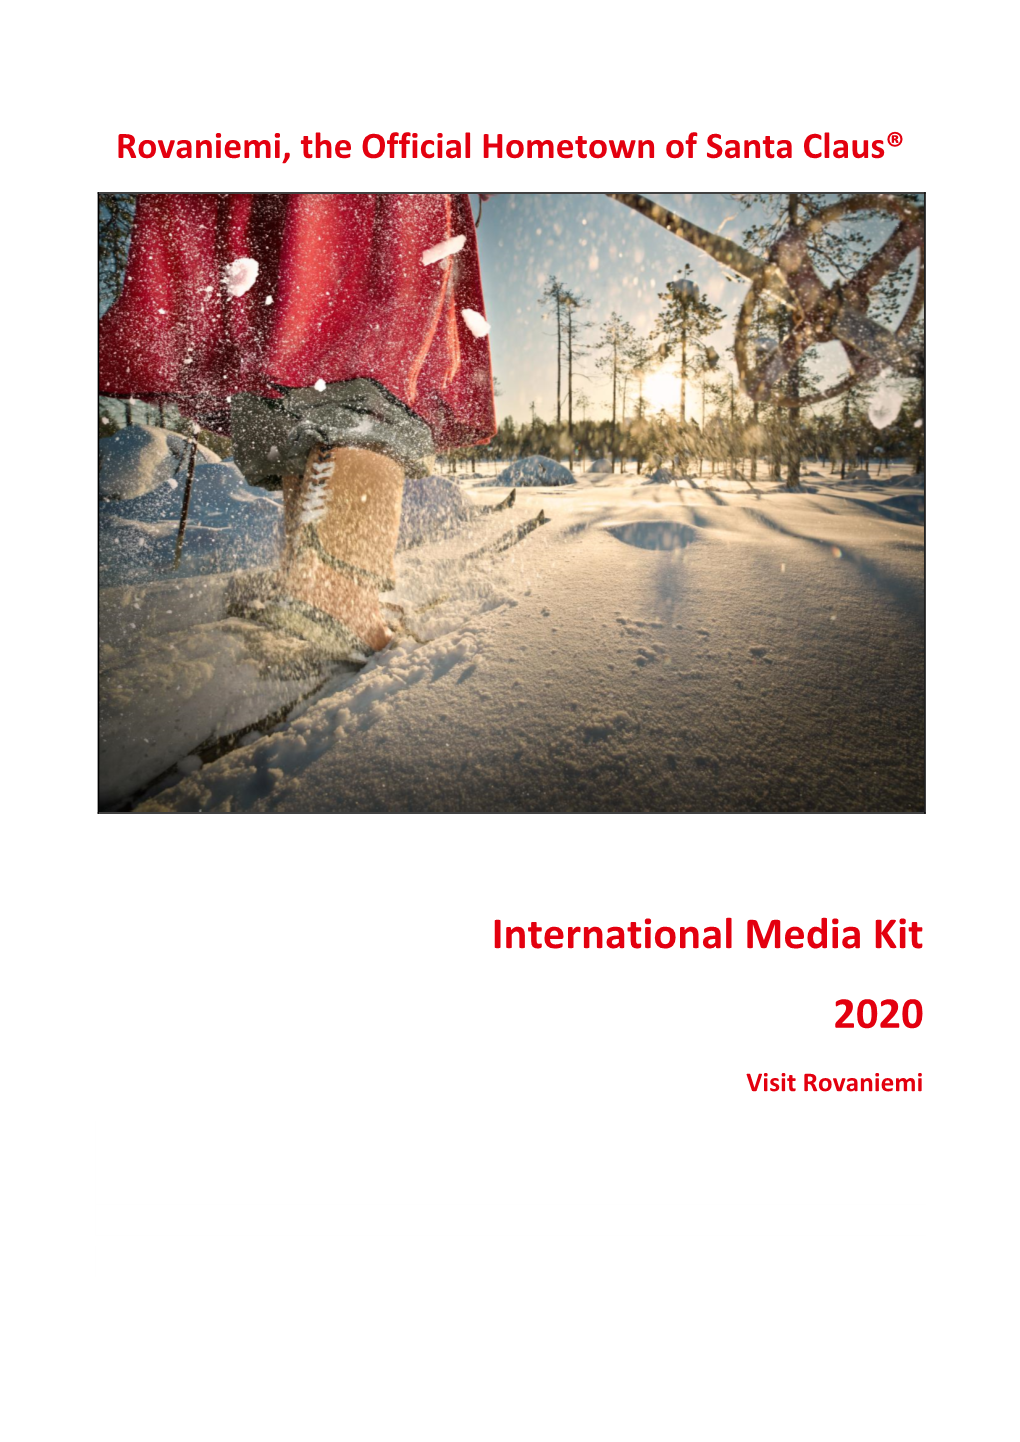 International Media Kit 2020